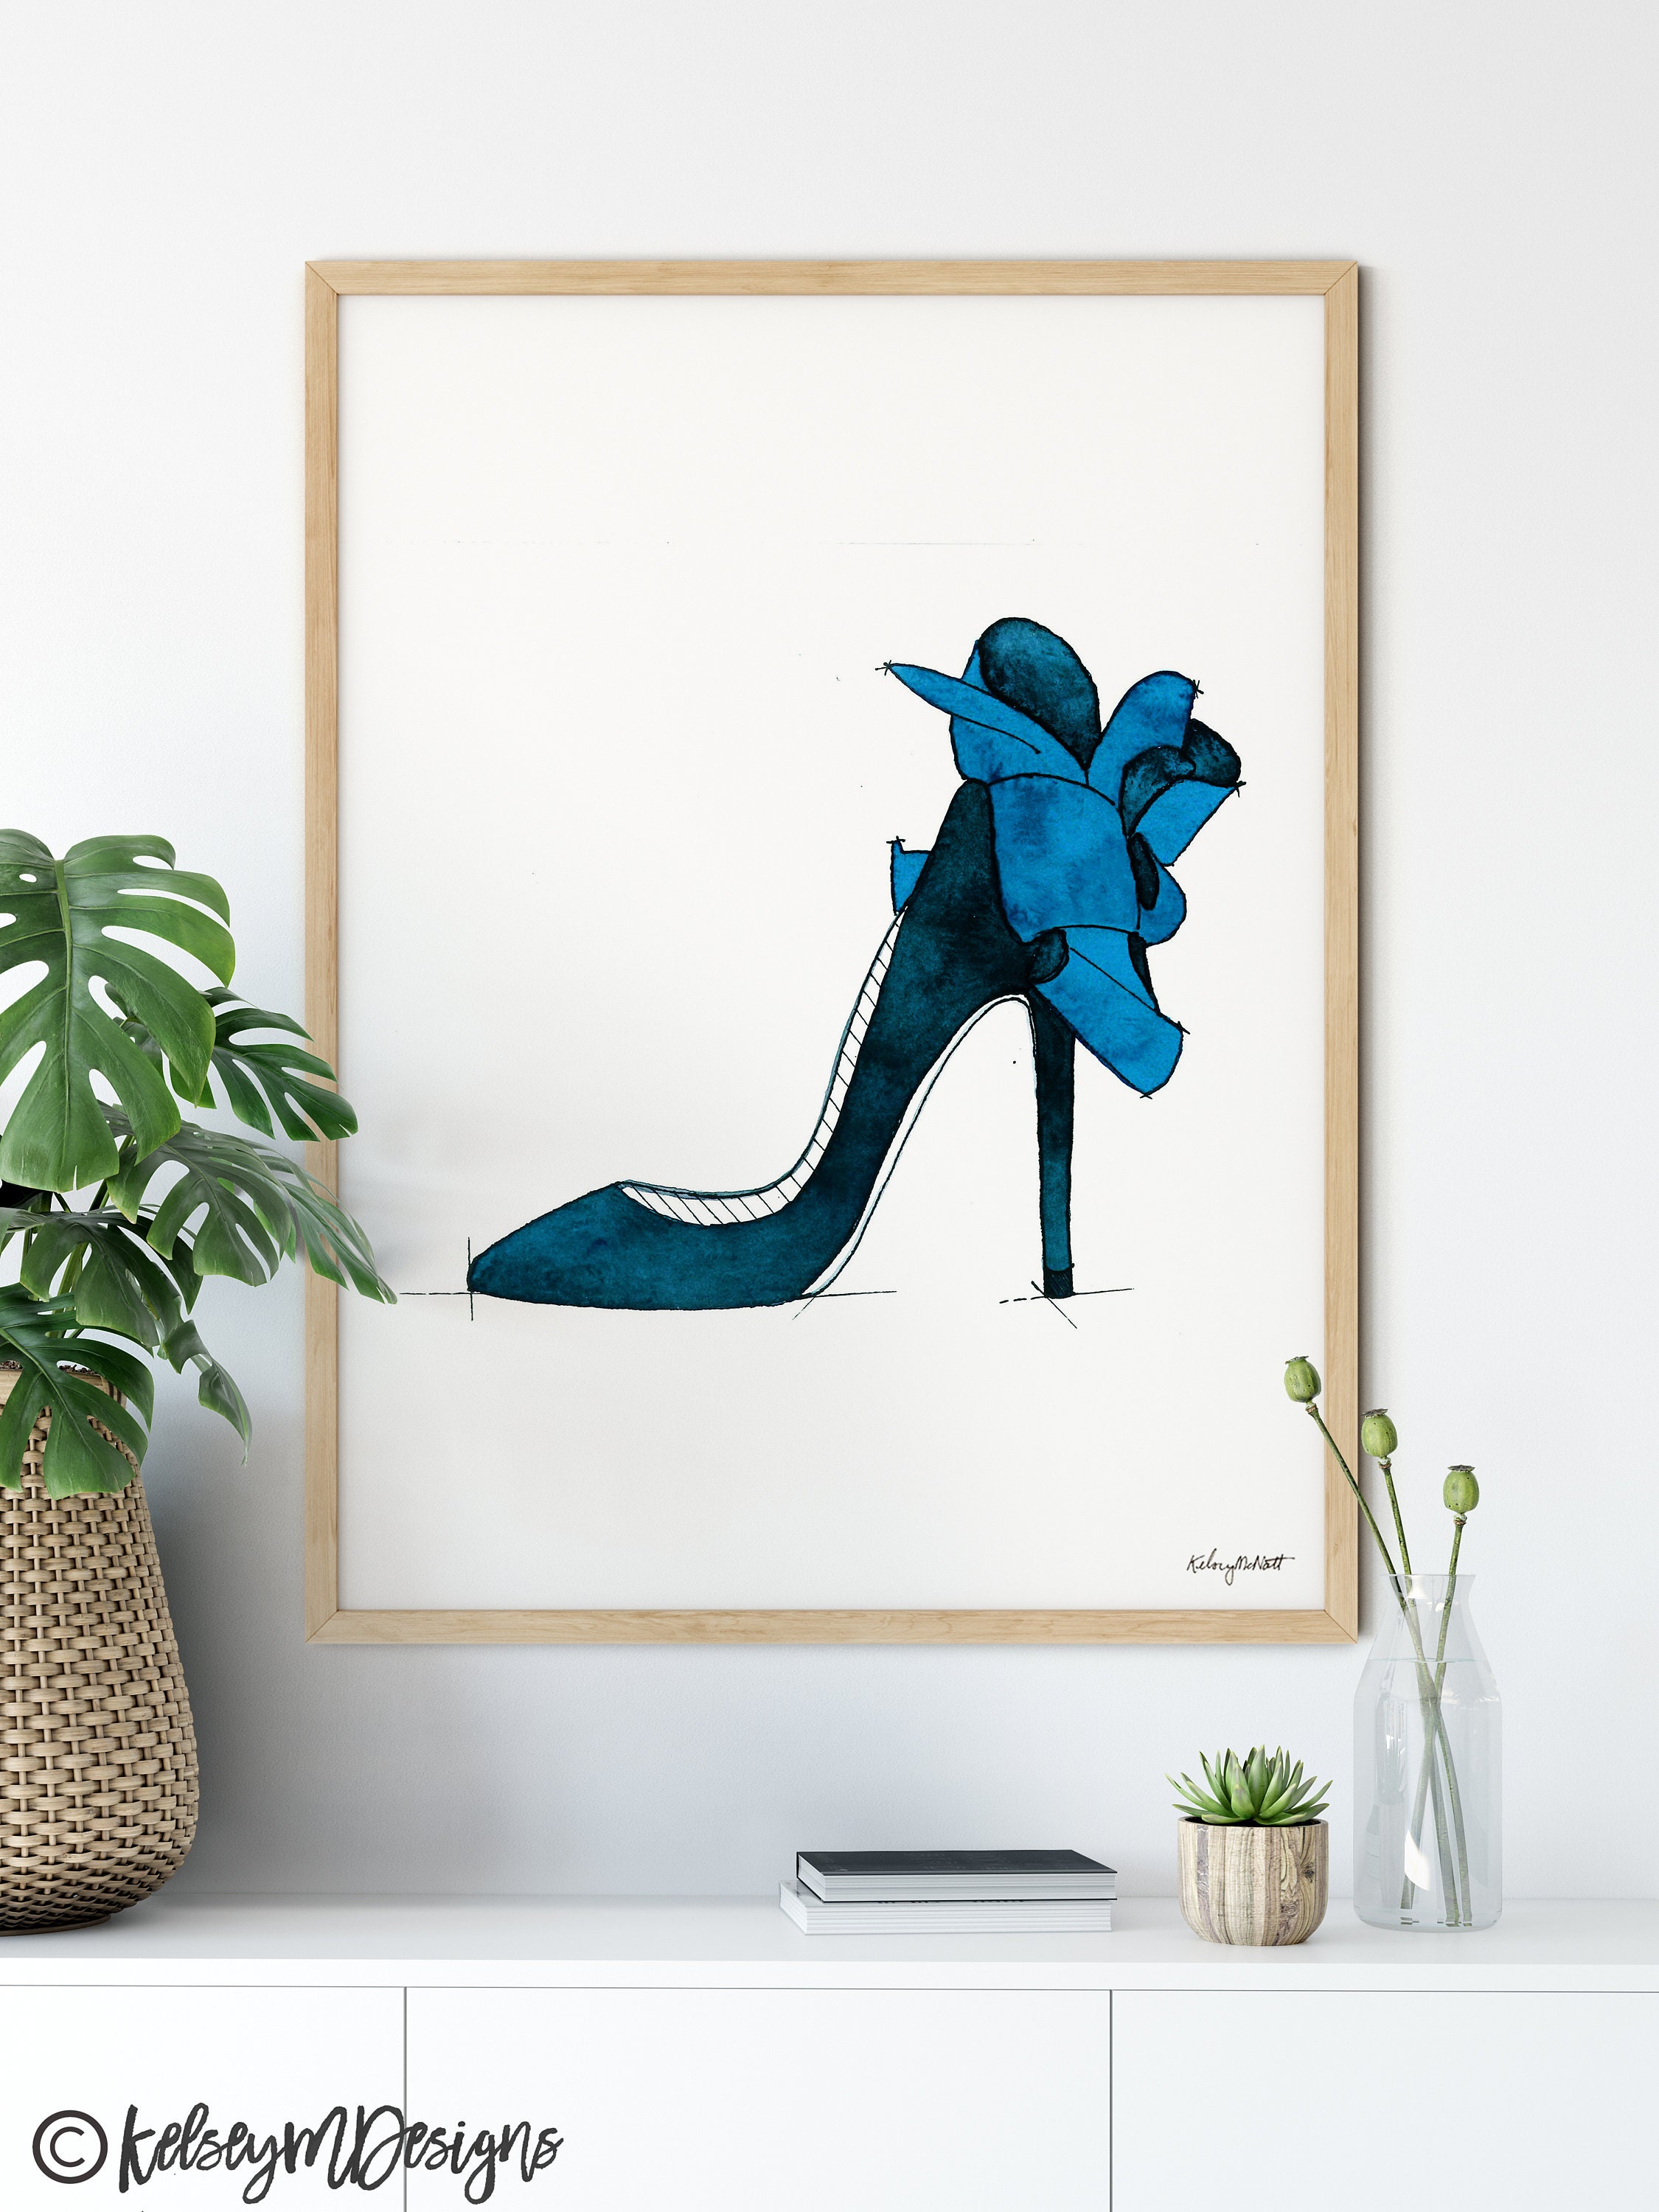 udbrud Stavning redde Louboutin High Heels Wall Art Fashion Illustration - Etsy Denmark